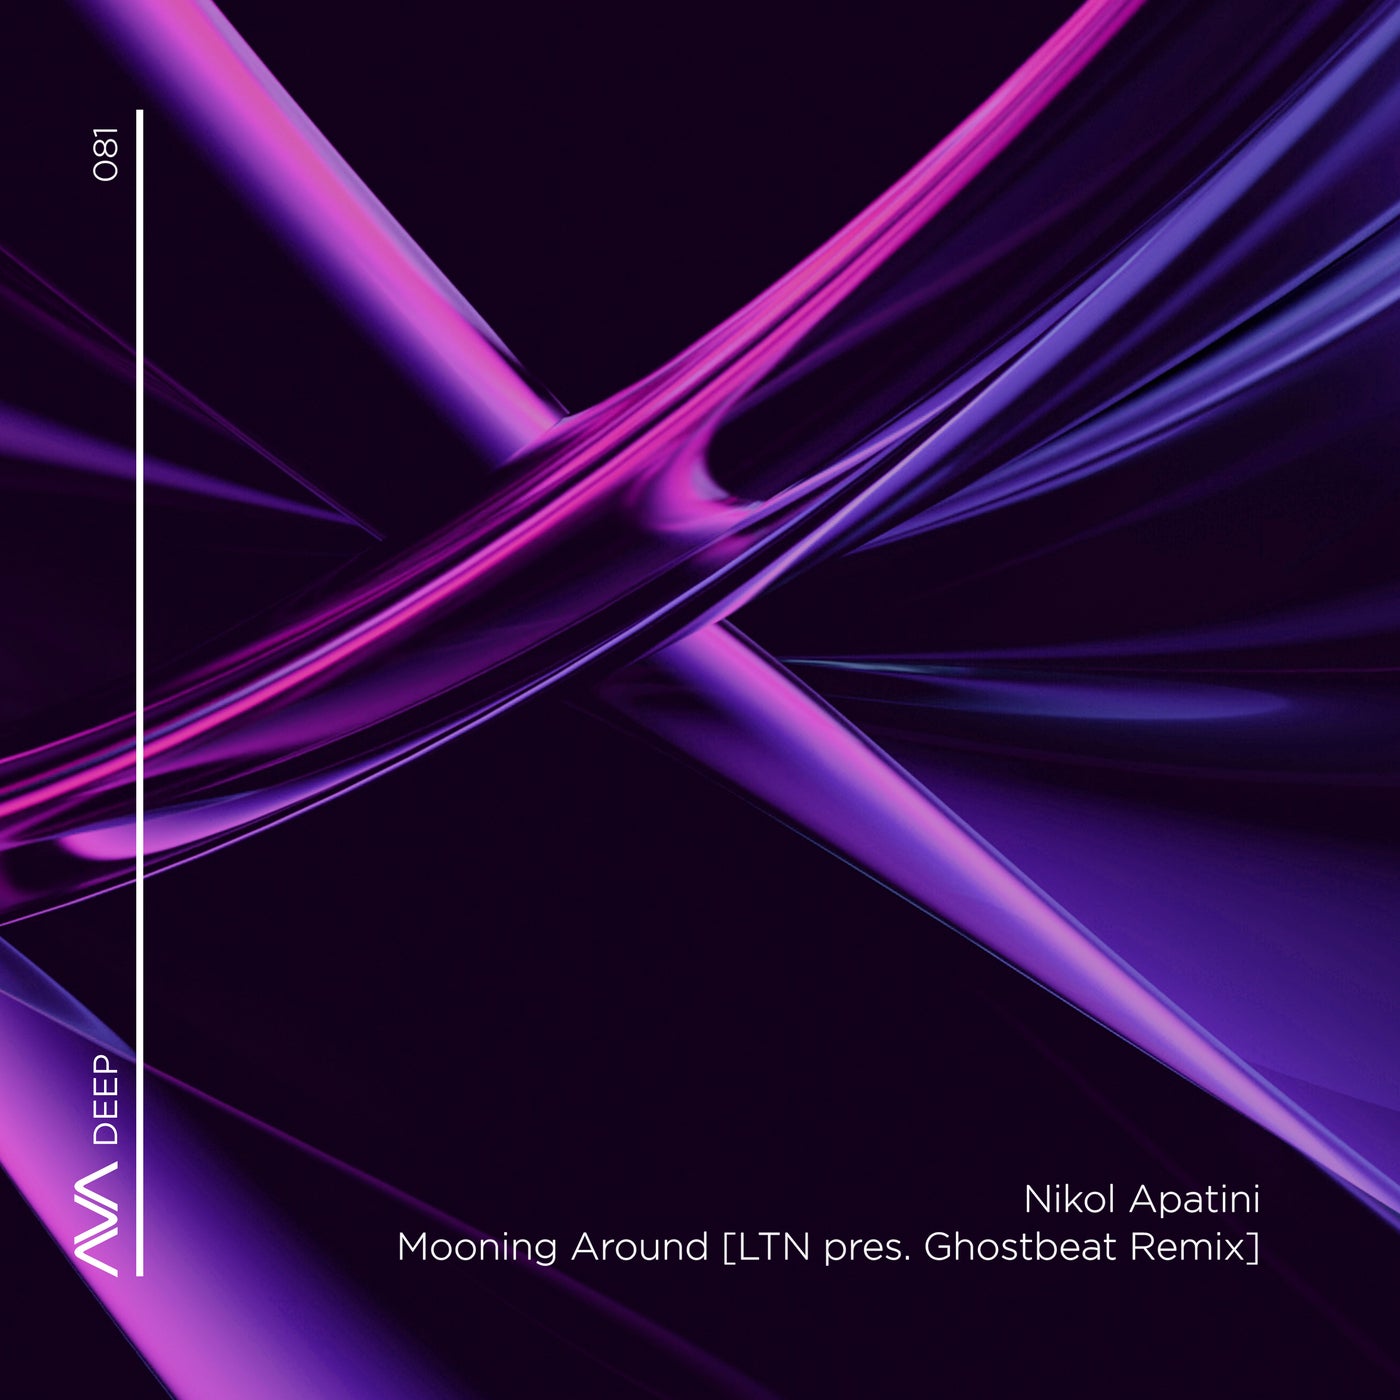 Mooning Around - LTN presents Ghostbeat Remix